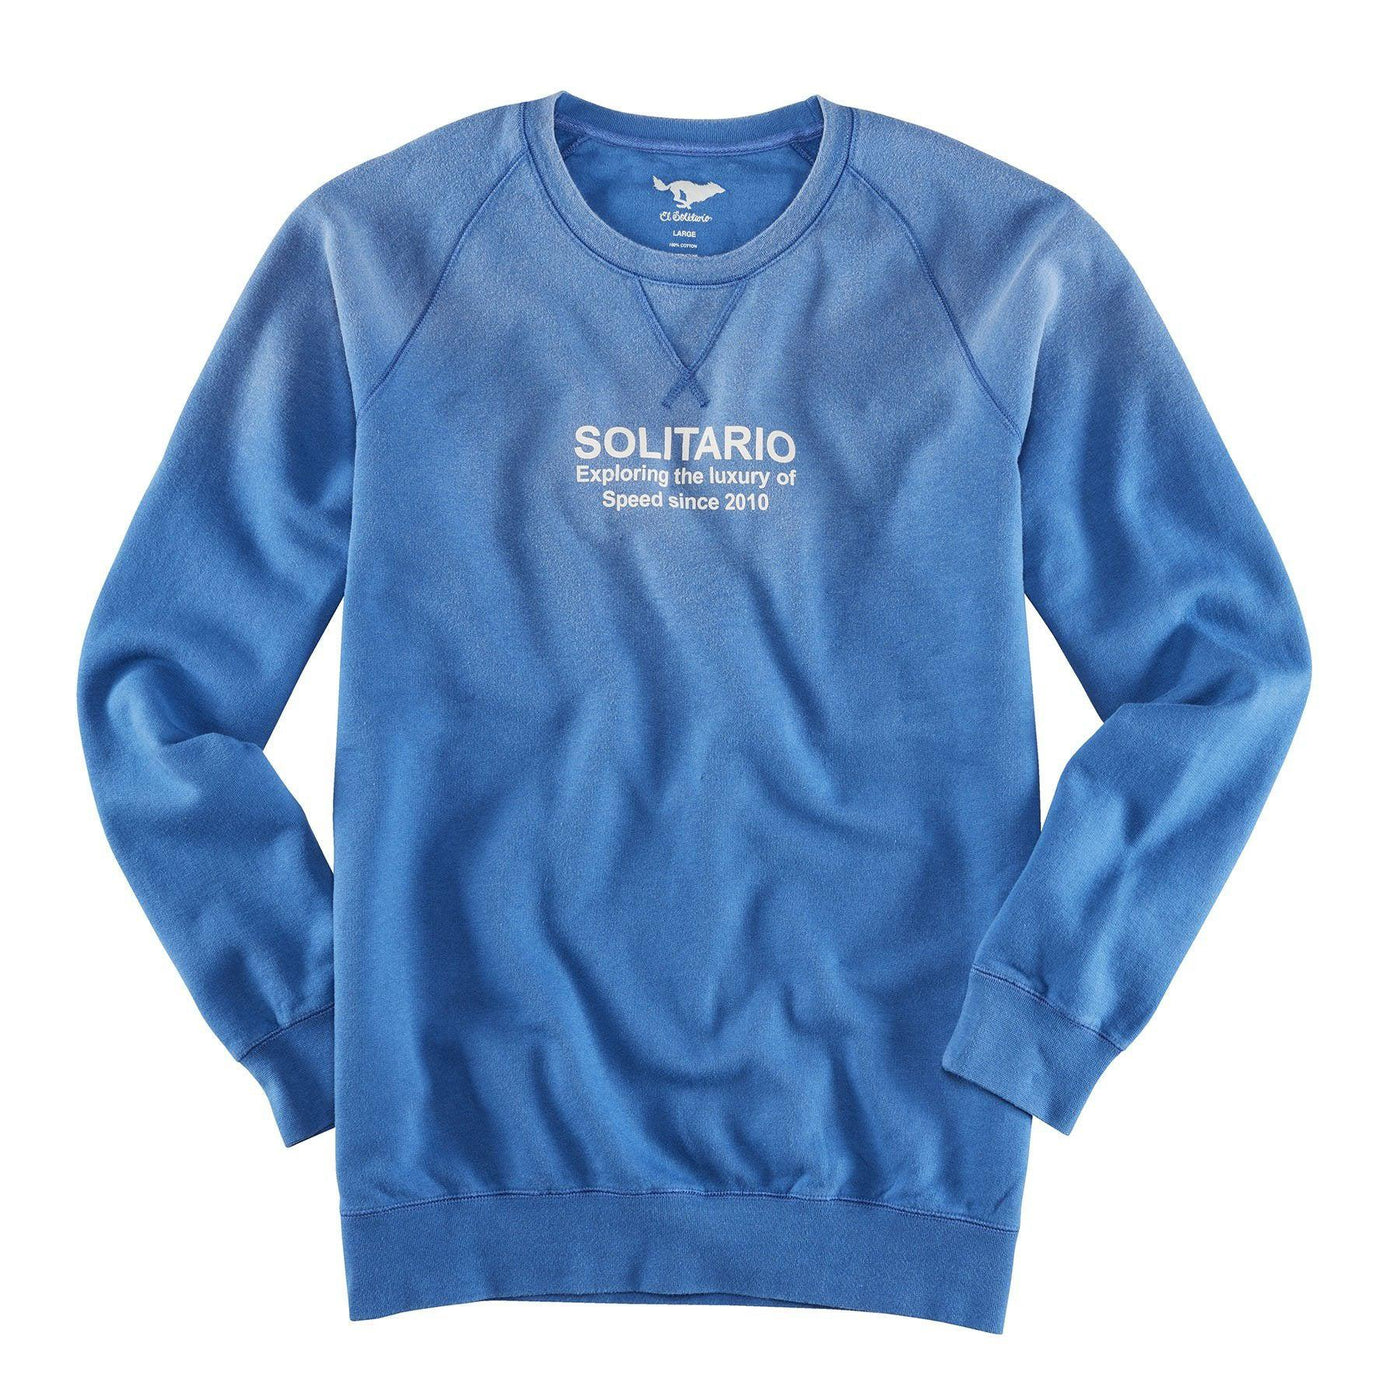 El Solitario Sweater Luxury of Speed Blue